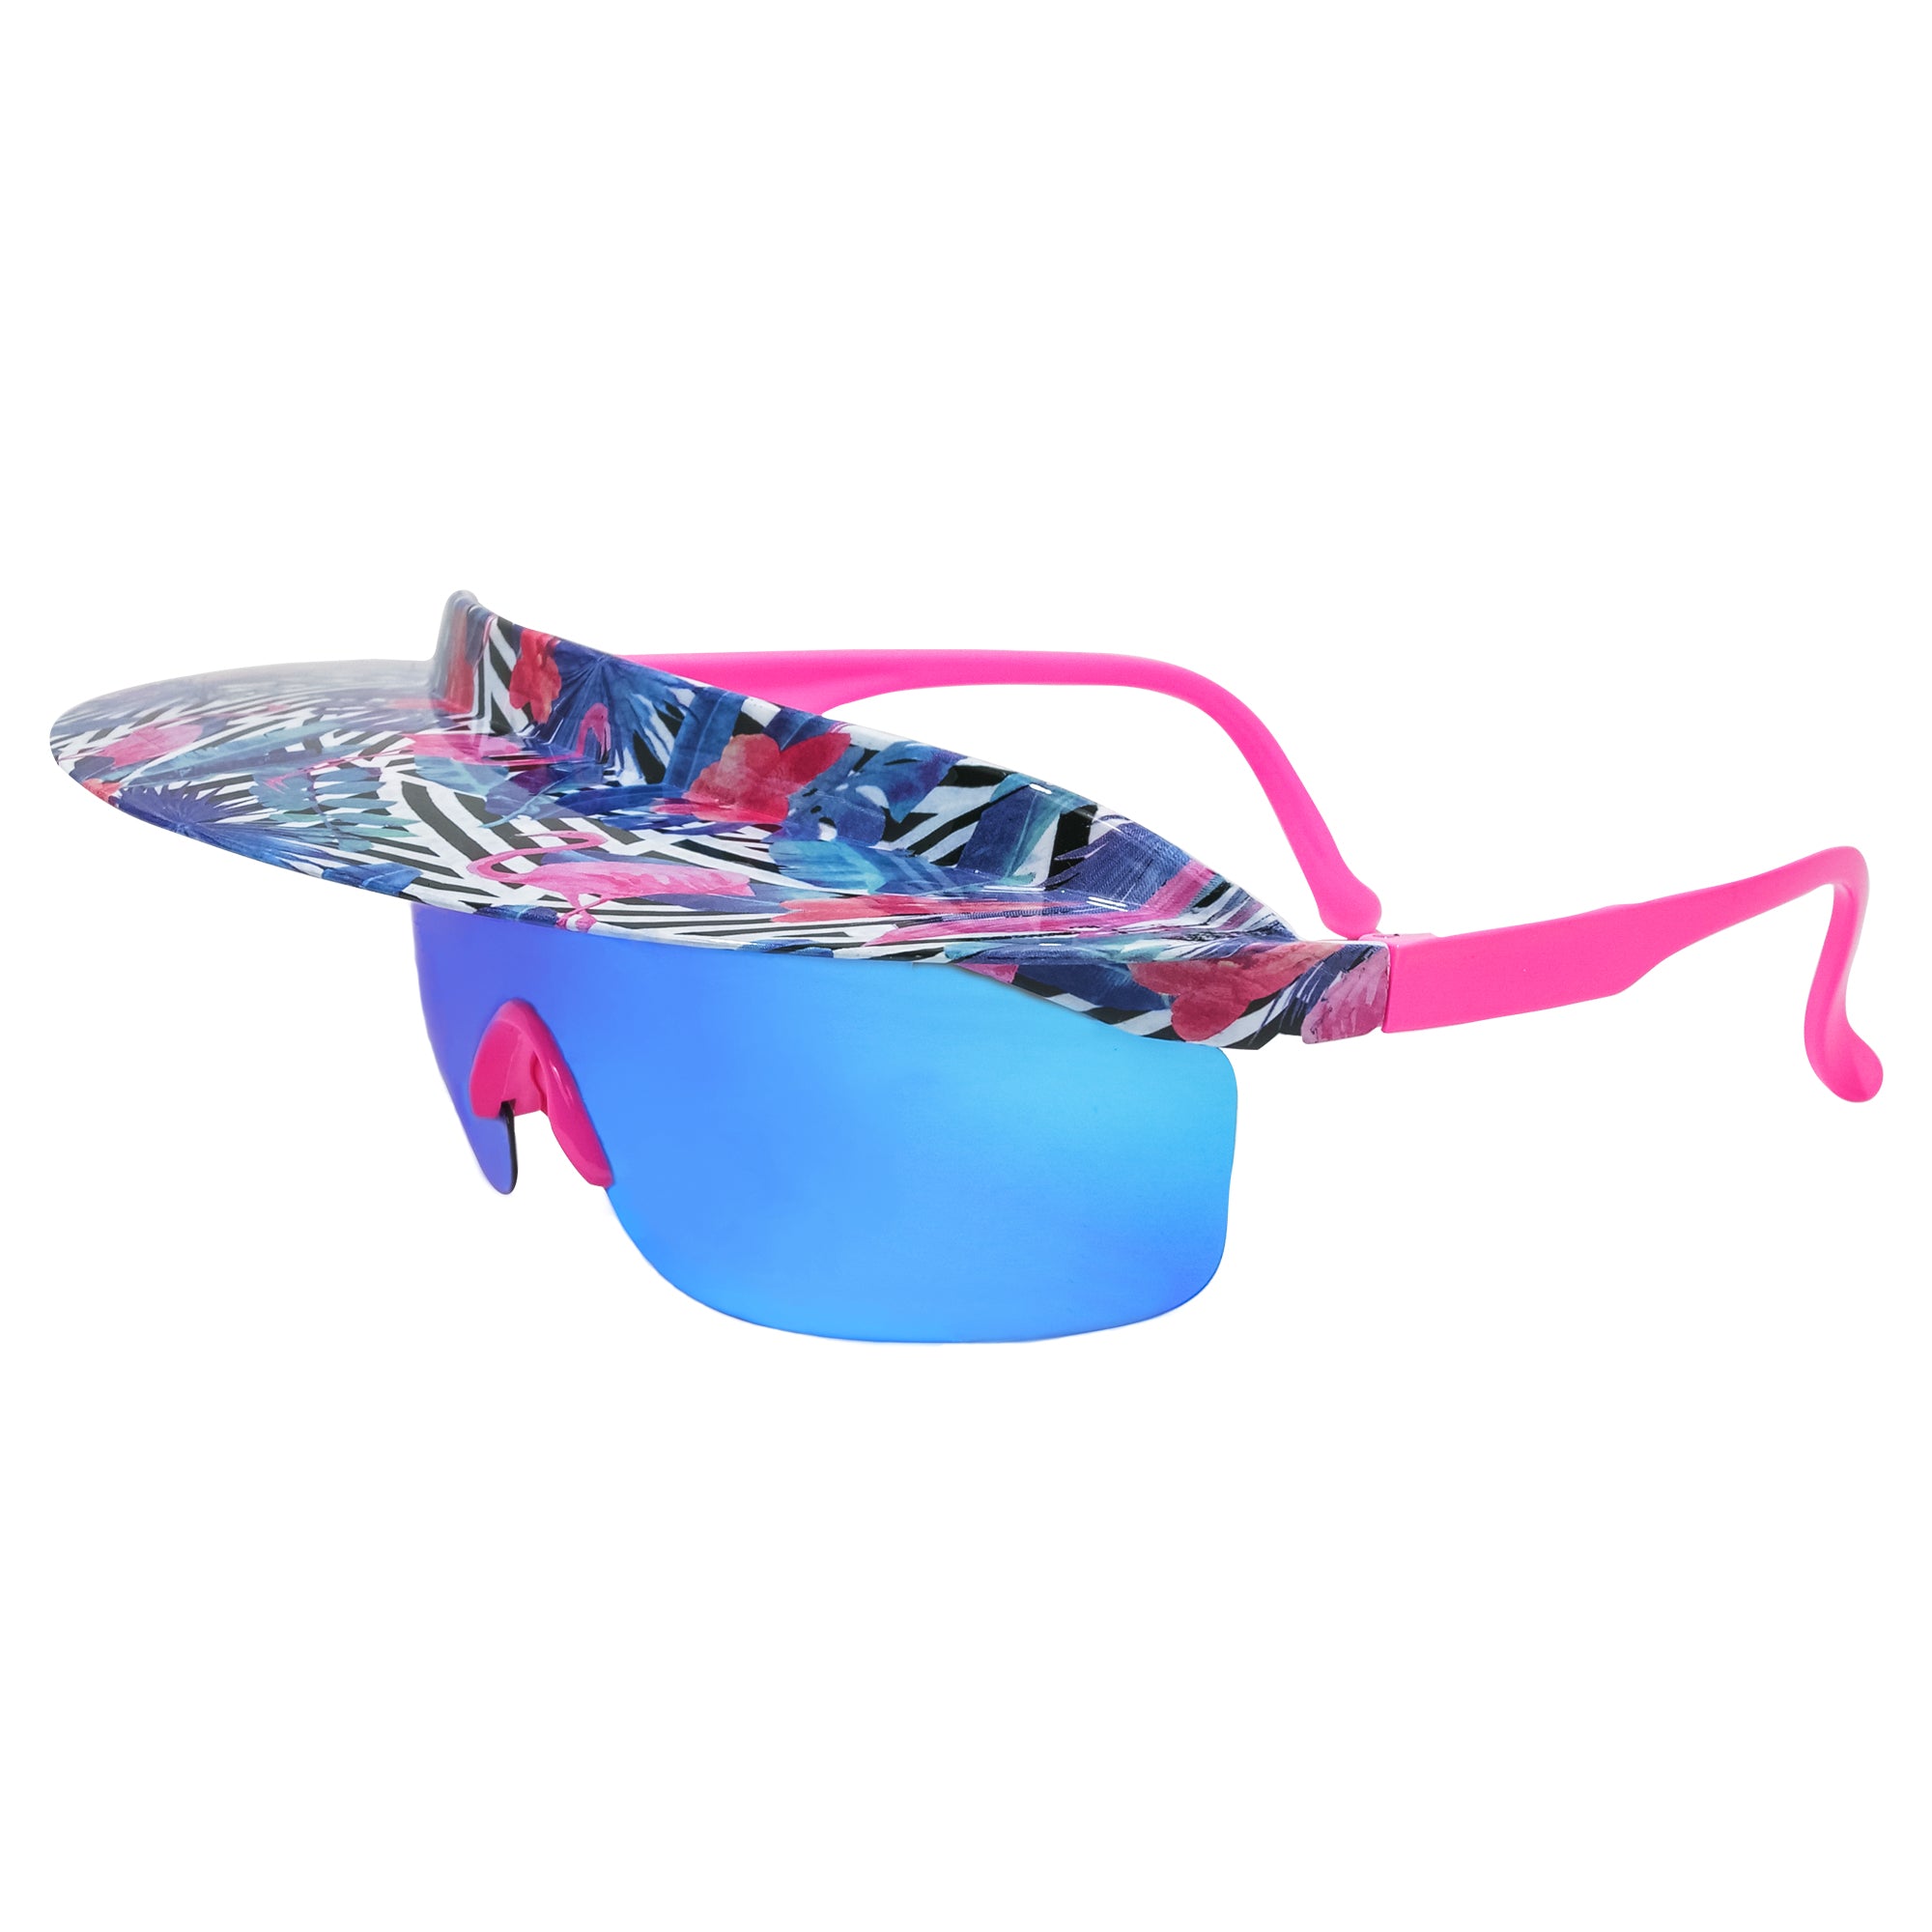 Don Johnson Retro Miami 80s Ski Boating Beach Flamingo Visor Shades Sunglasses - Polarized UV 400 Pink blue white tropical flamingo floral 80s 90s design from the boats to the slopes Visor sunglasses. B Fresh Gear